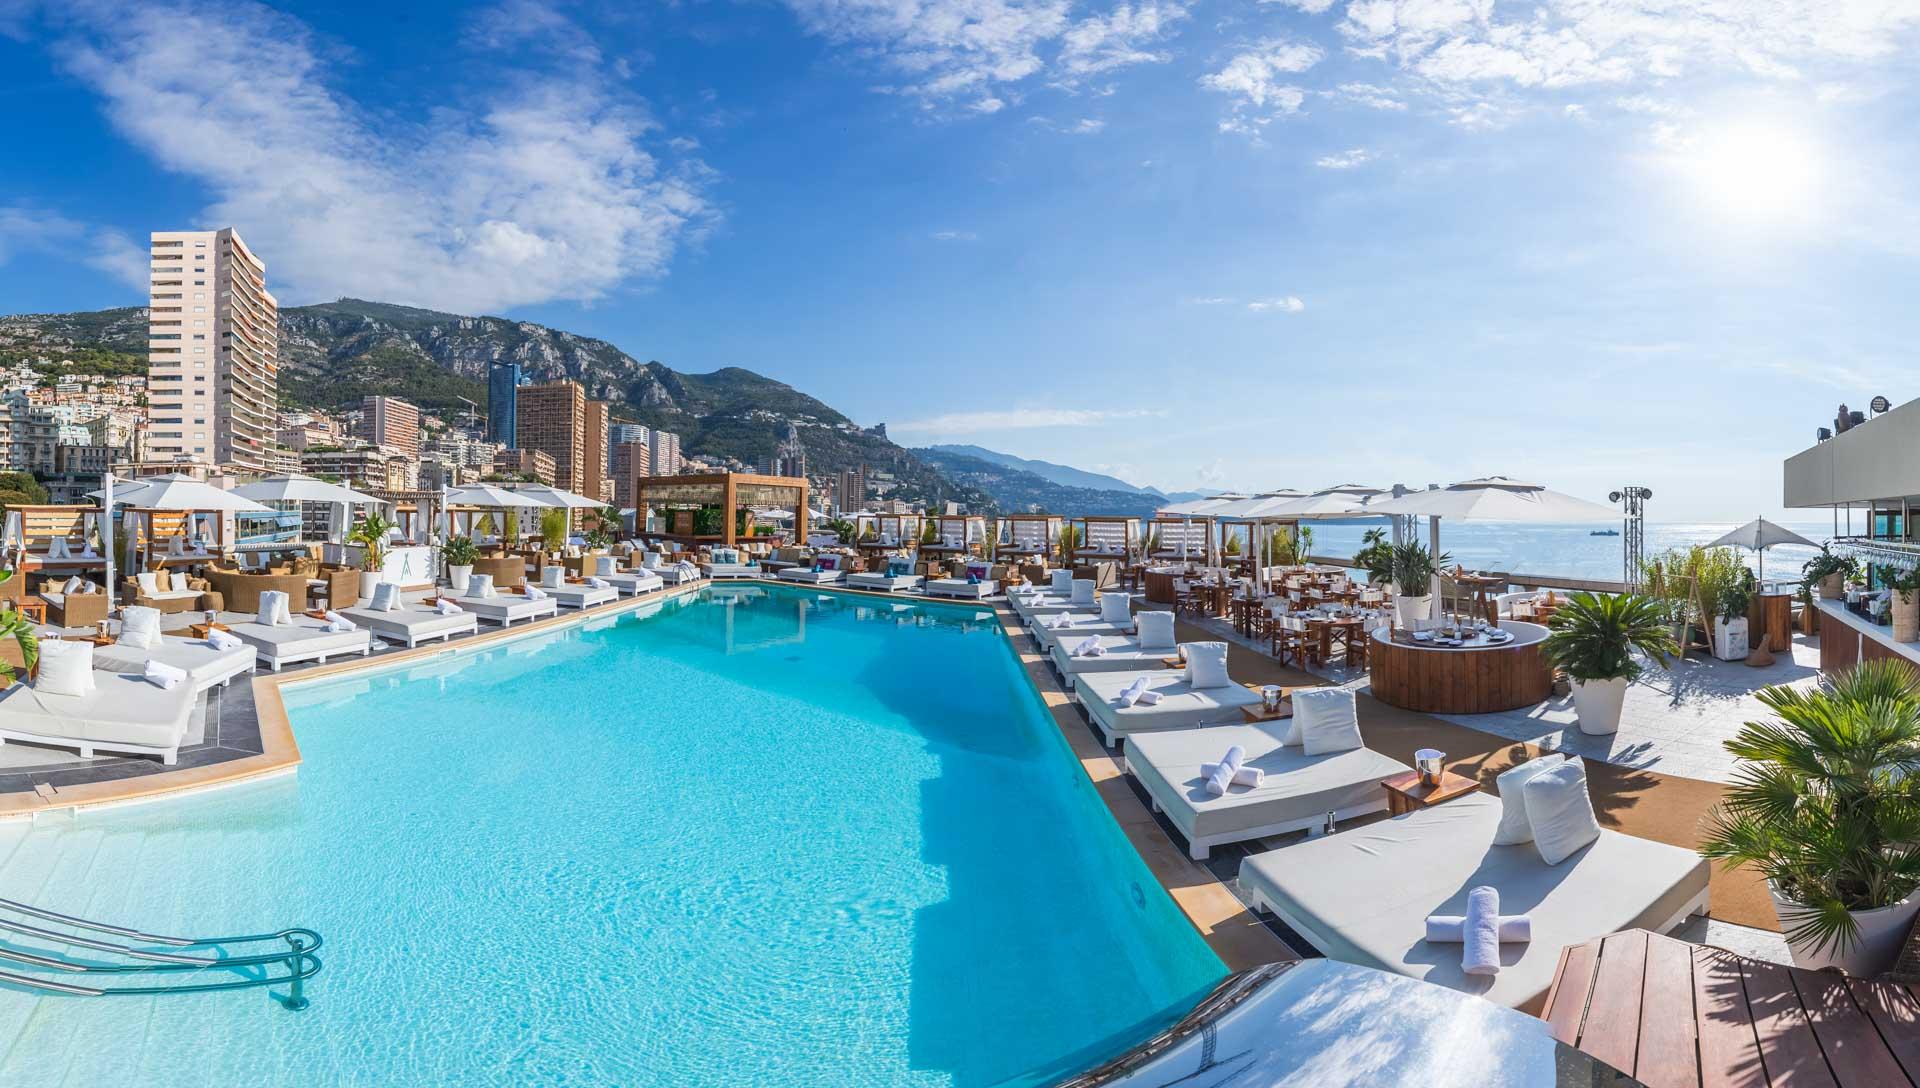 La piscine en rooftop du Fairmont Monte-Carlo © Artman Agency